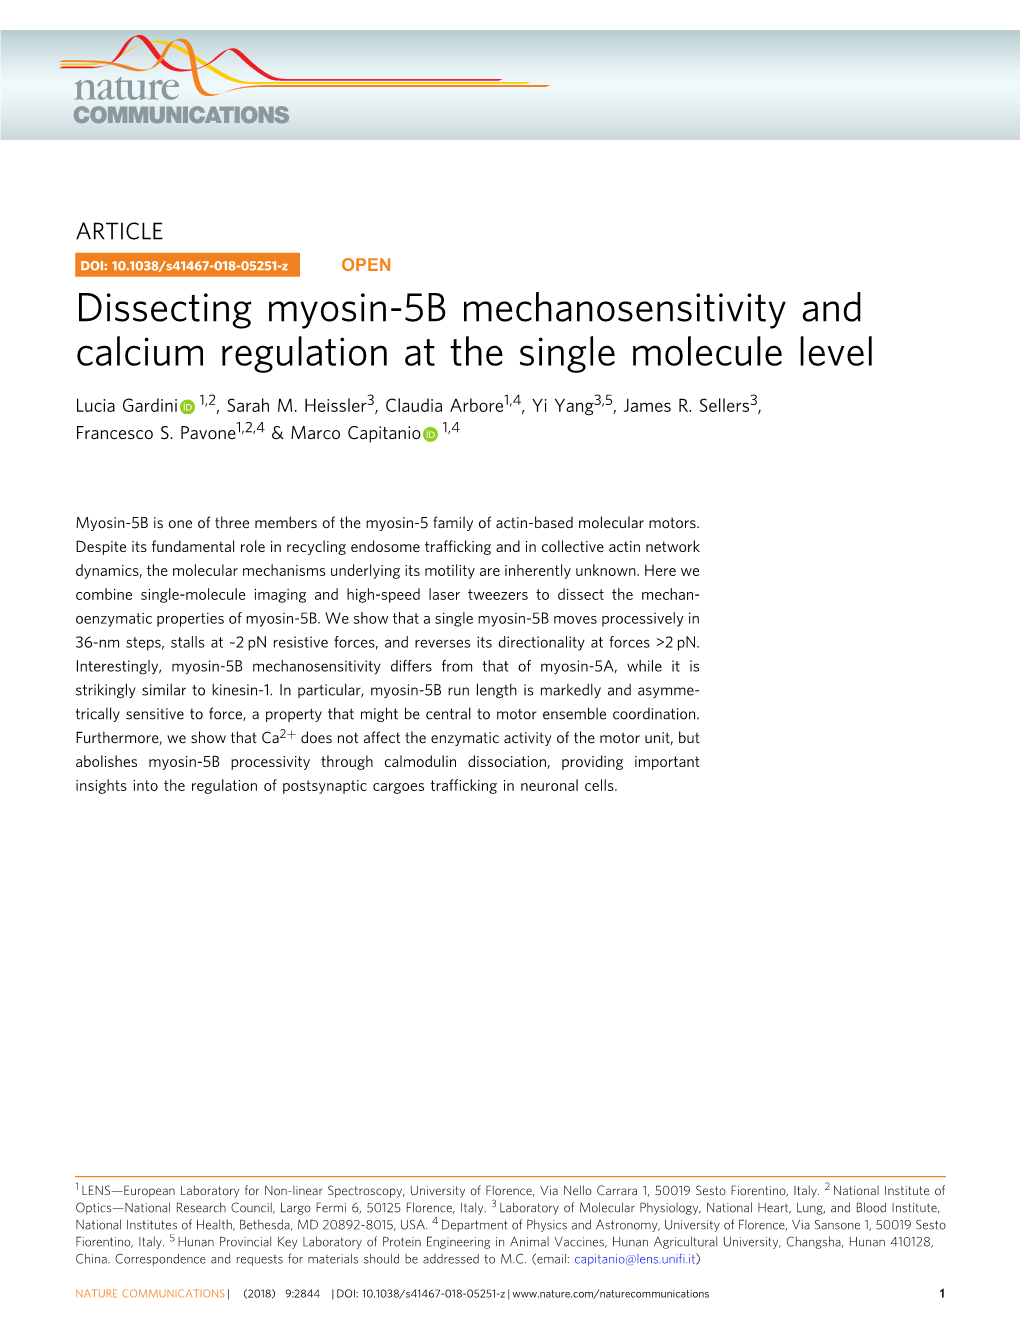 Dissecting Myosin-5B Mechanosensitivity and Calcium Regulation at the Single Molecule Level